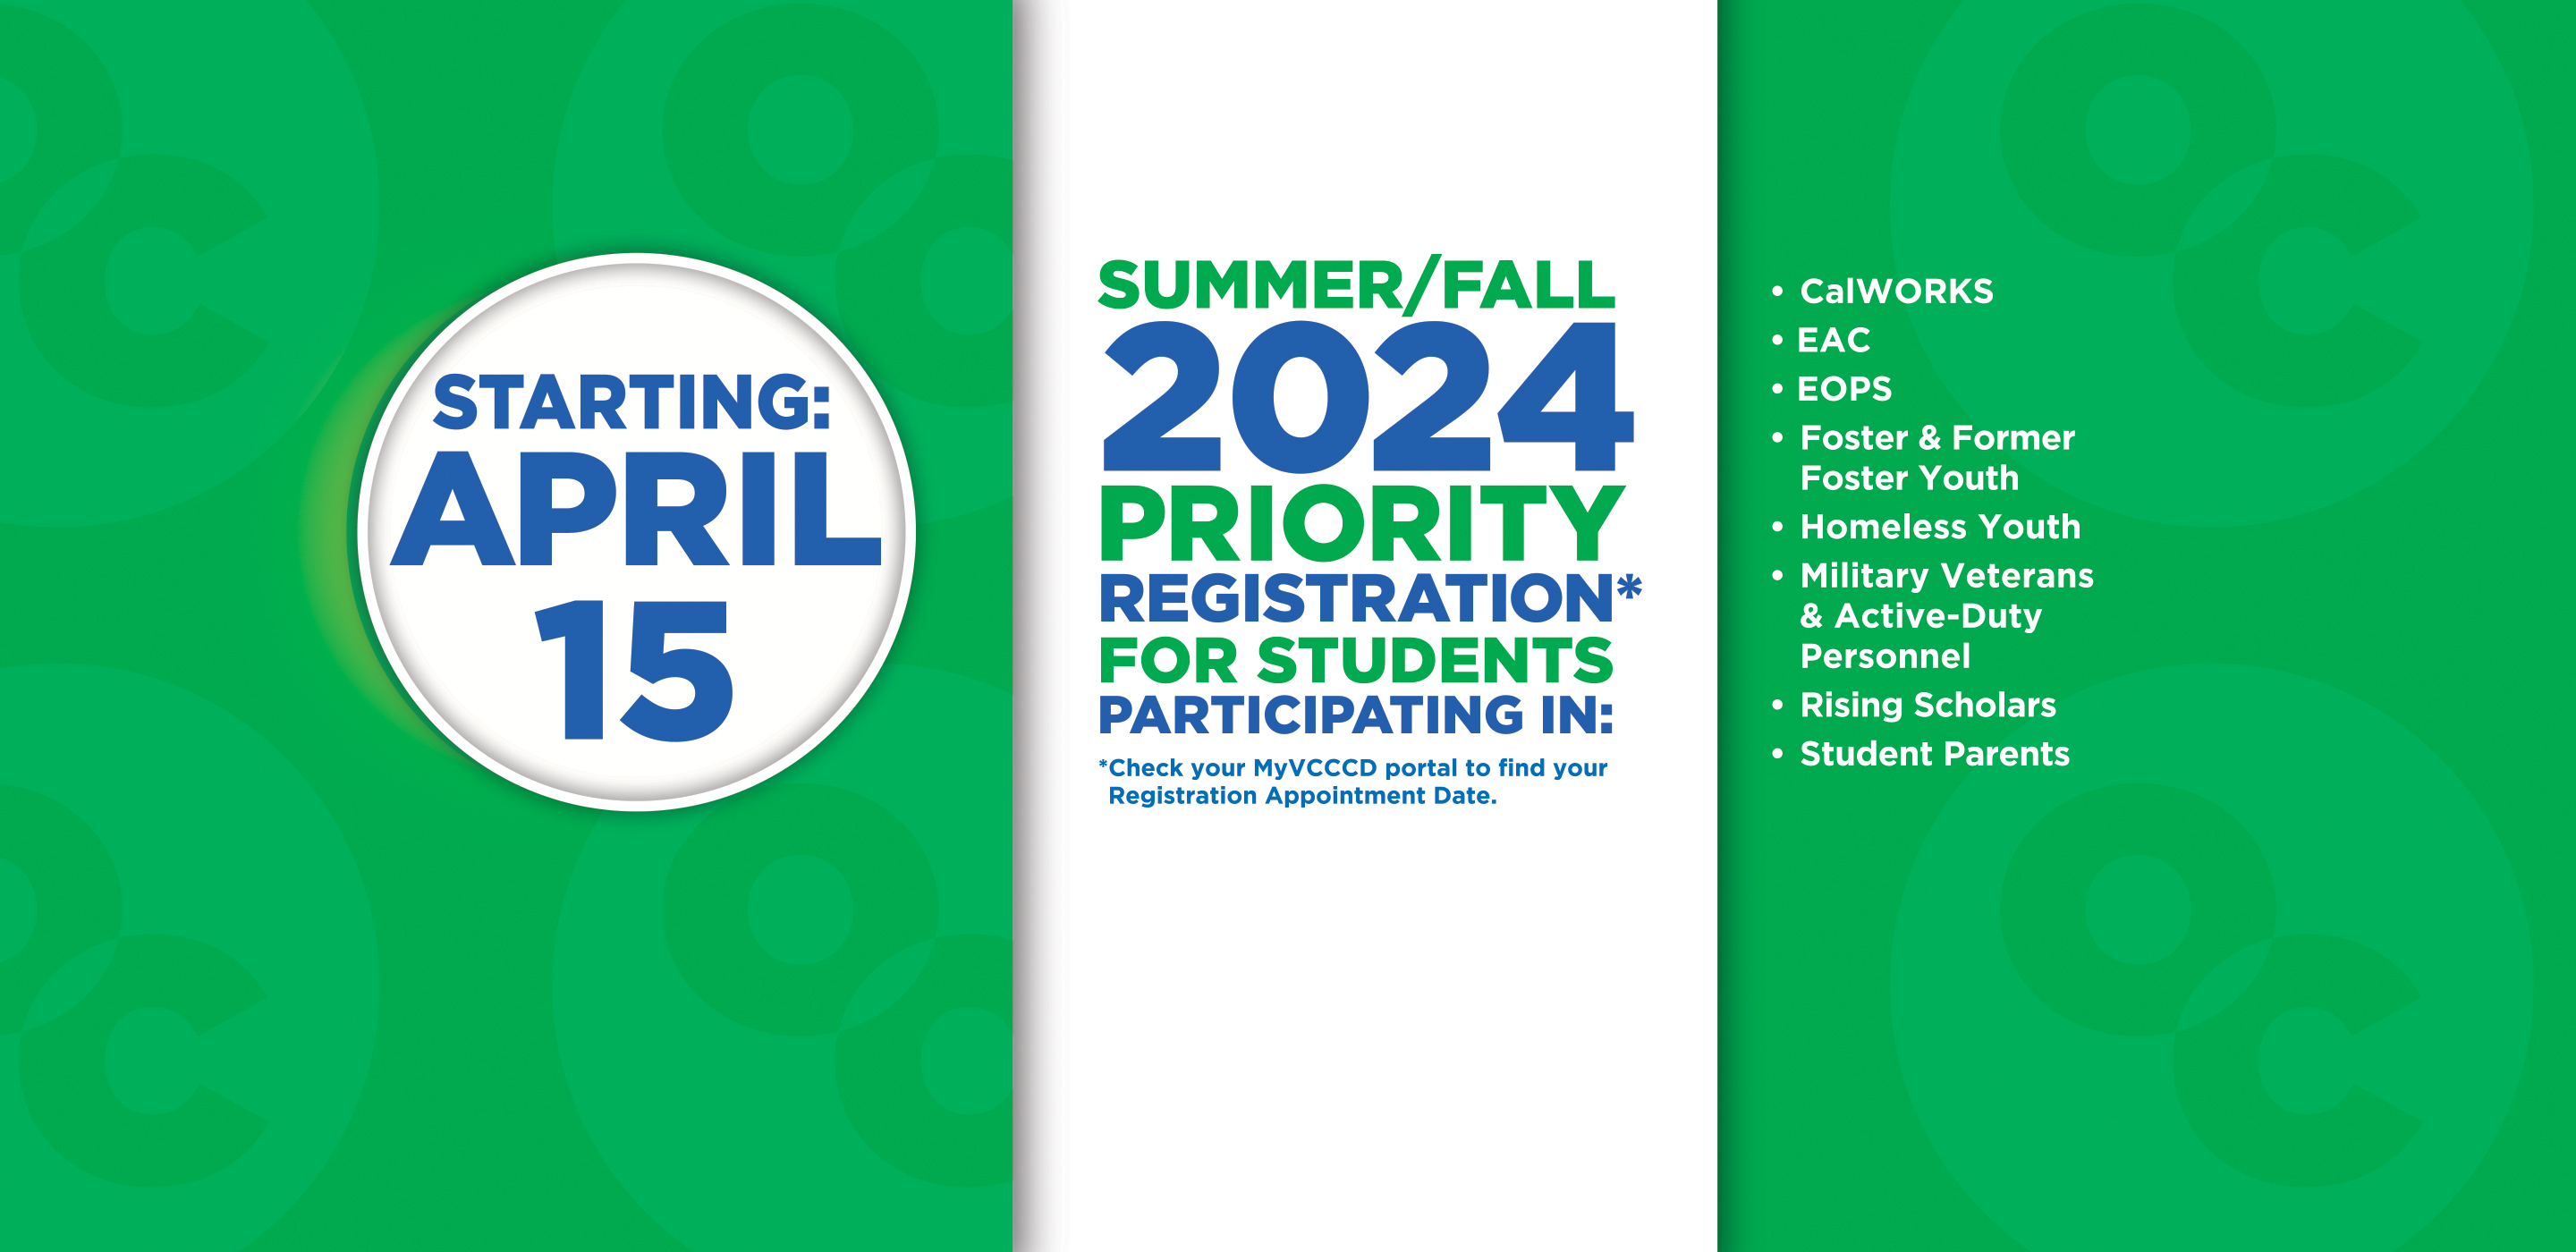 April 15: Summer/Fall 2024 Priority Registration Begins